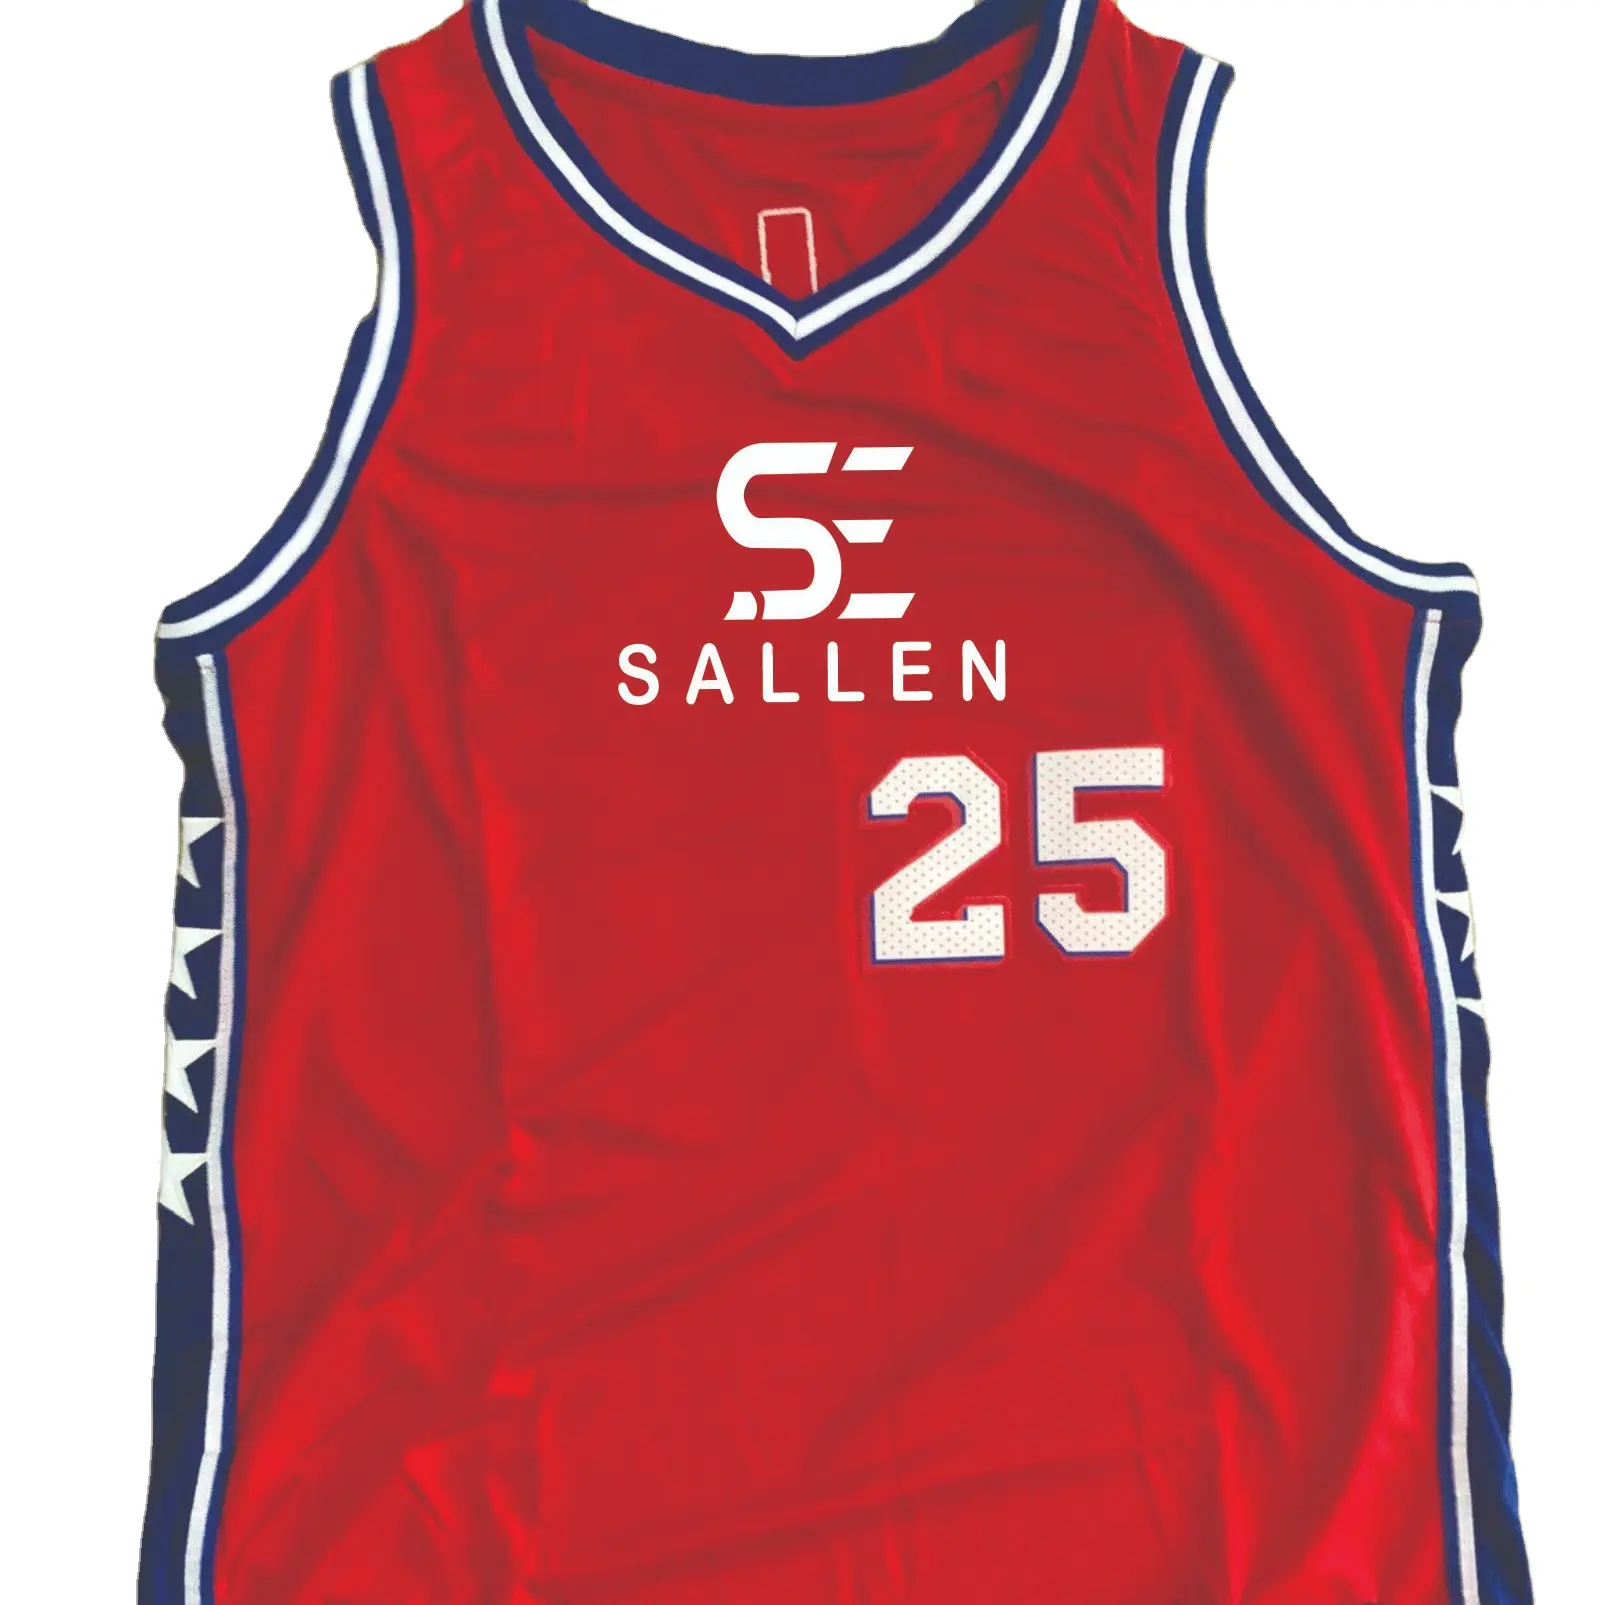 2023 Wholesale cheap sportswear basketball uniforms new design youth basketball uniform set